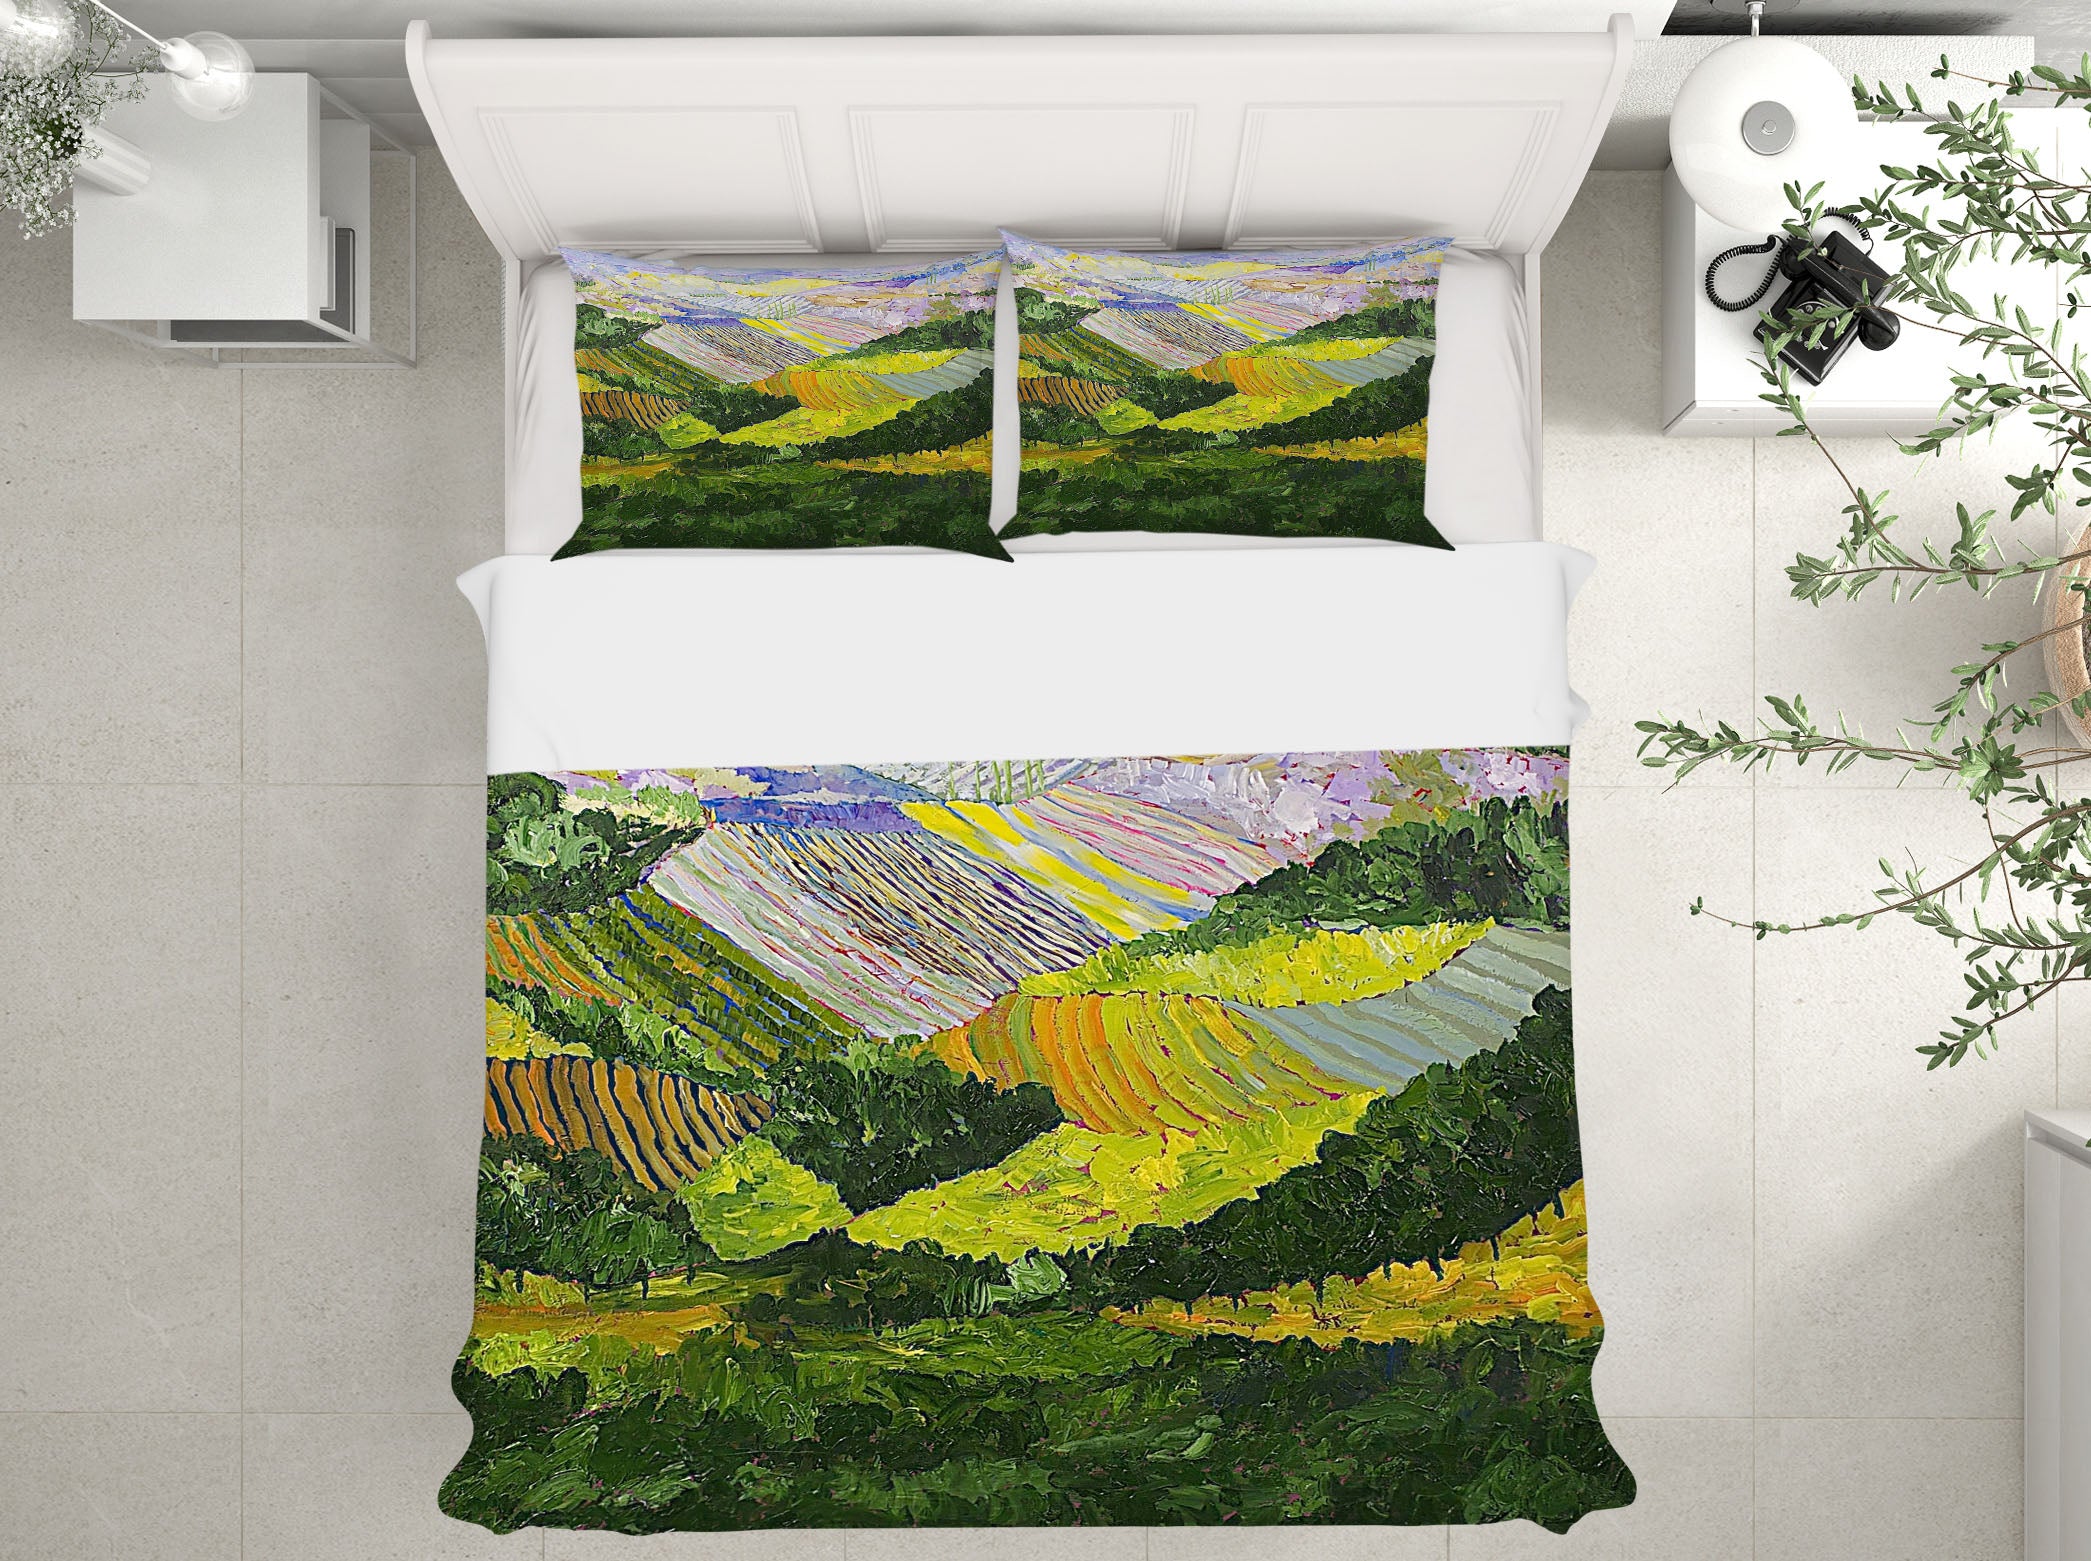 3D Forest And Harvest 2106 Allan P. Friedlander Bedding Bed Pillowcases Quilt